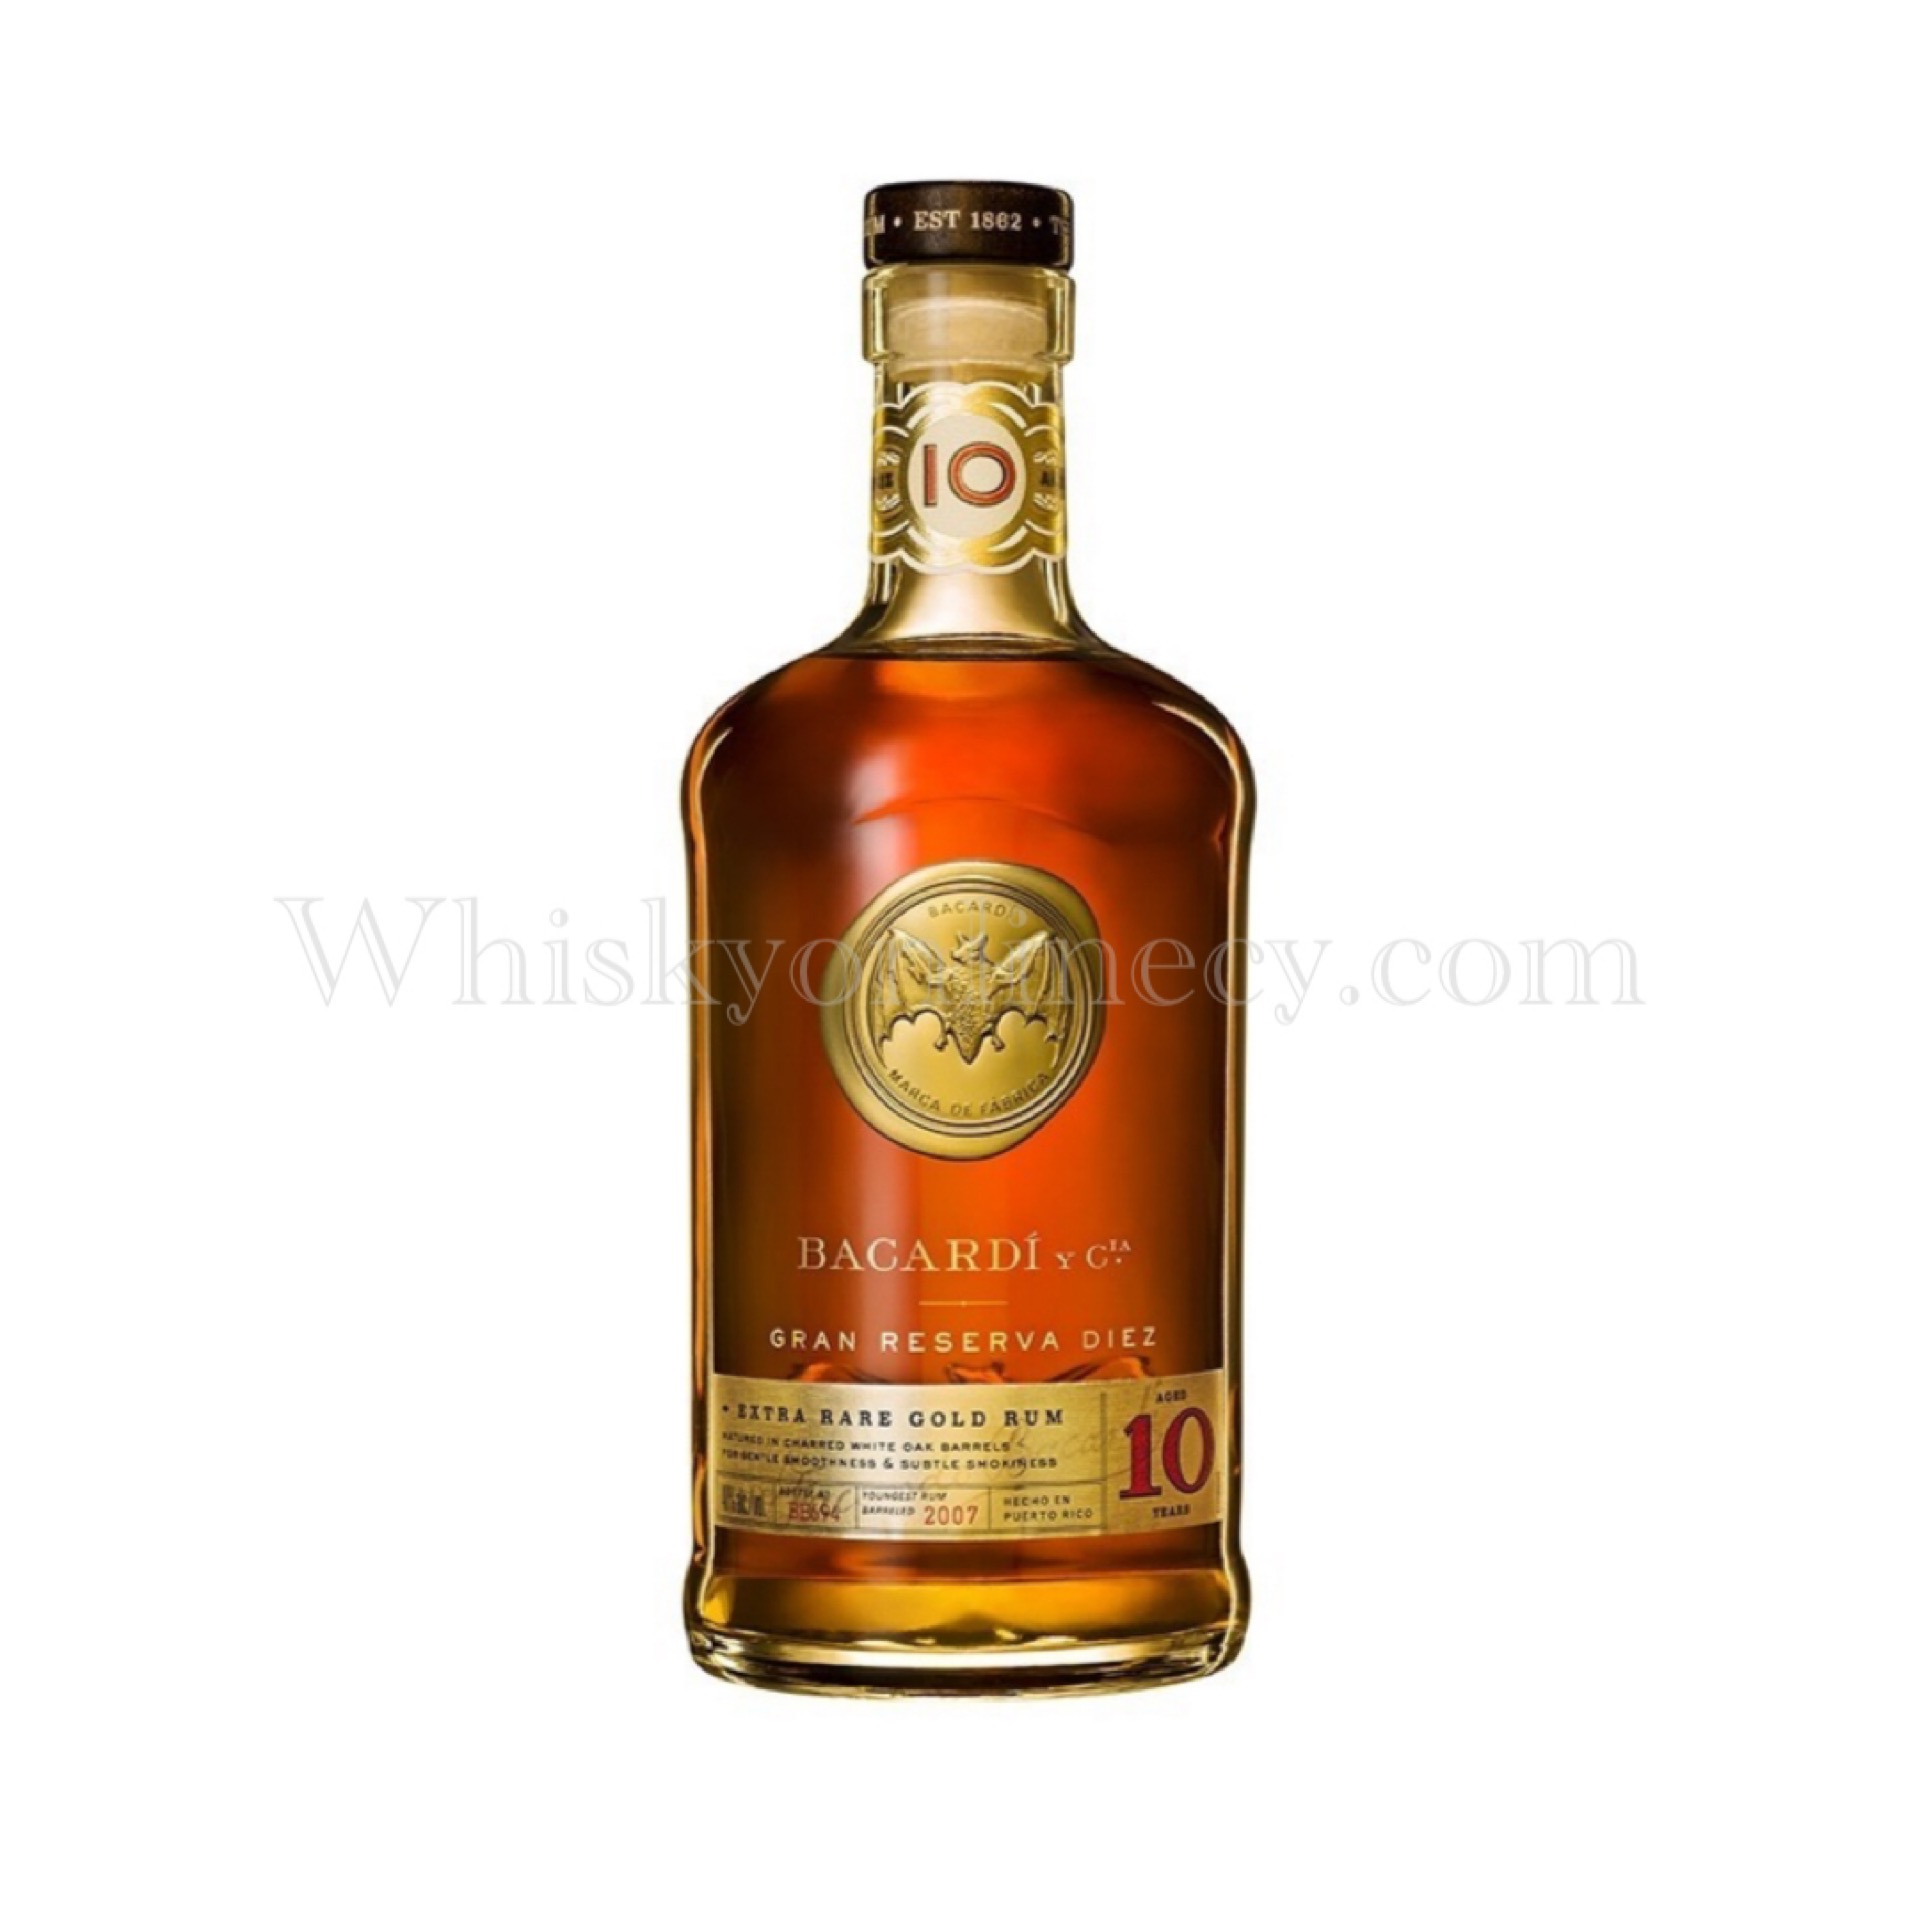 Whisky Online Cyprus - Bacardi 10 Year Old Gran Reserva Diez (70cl, 40%)